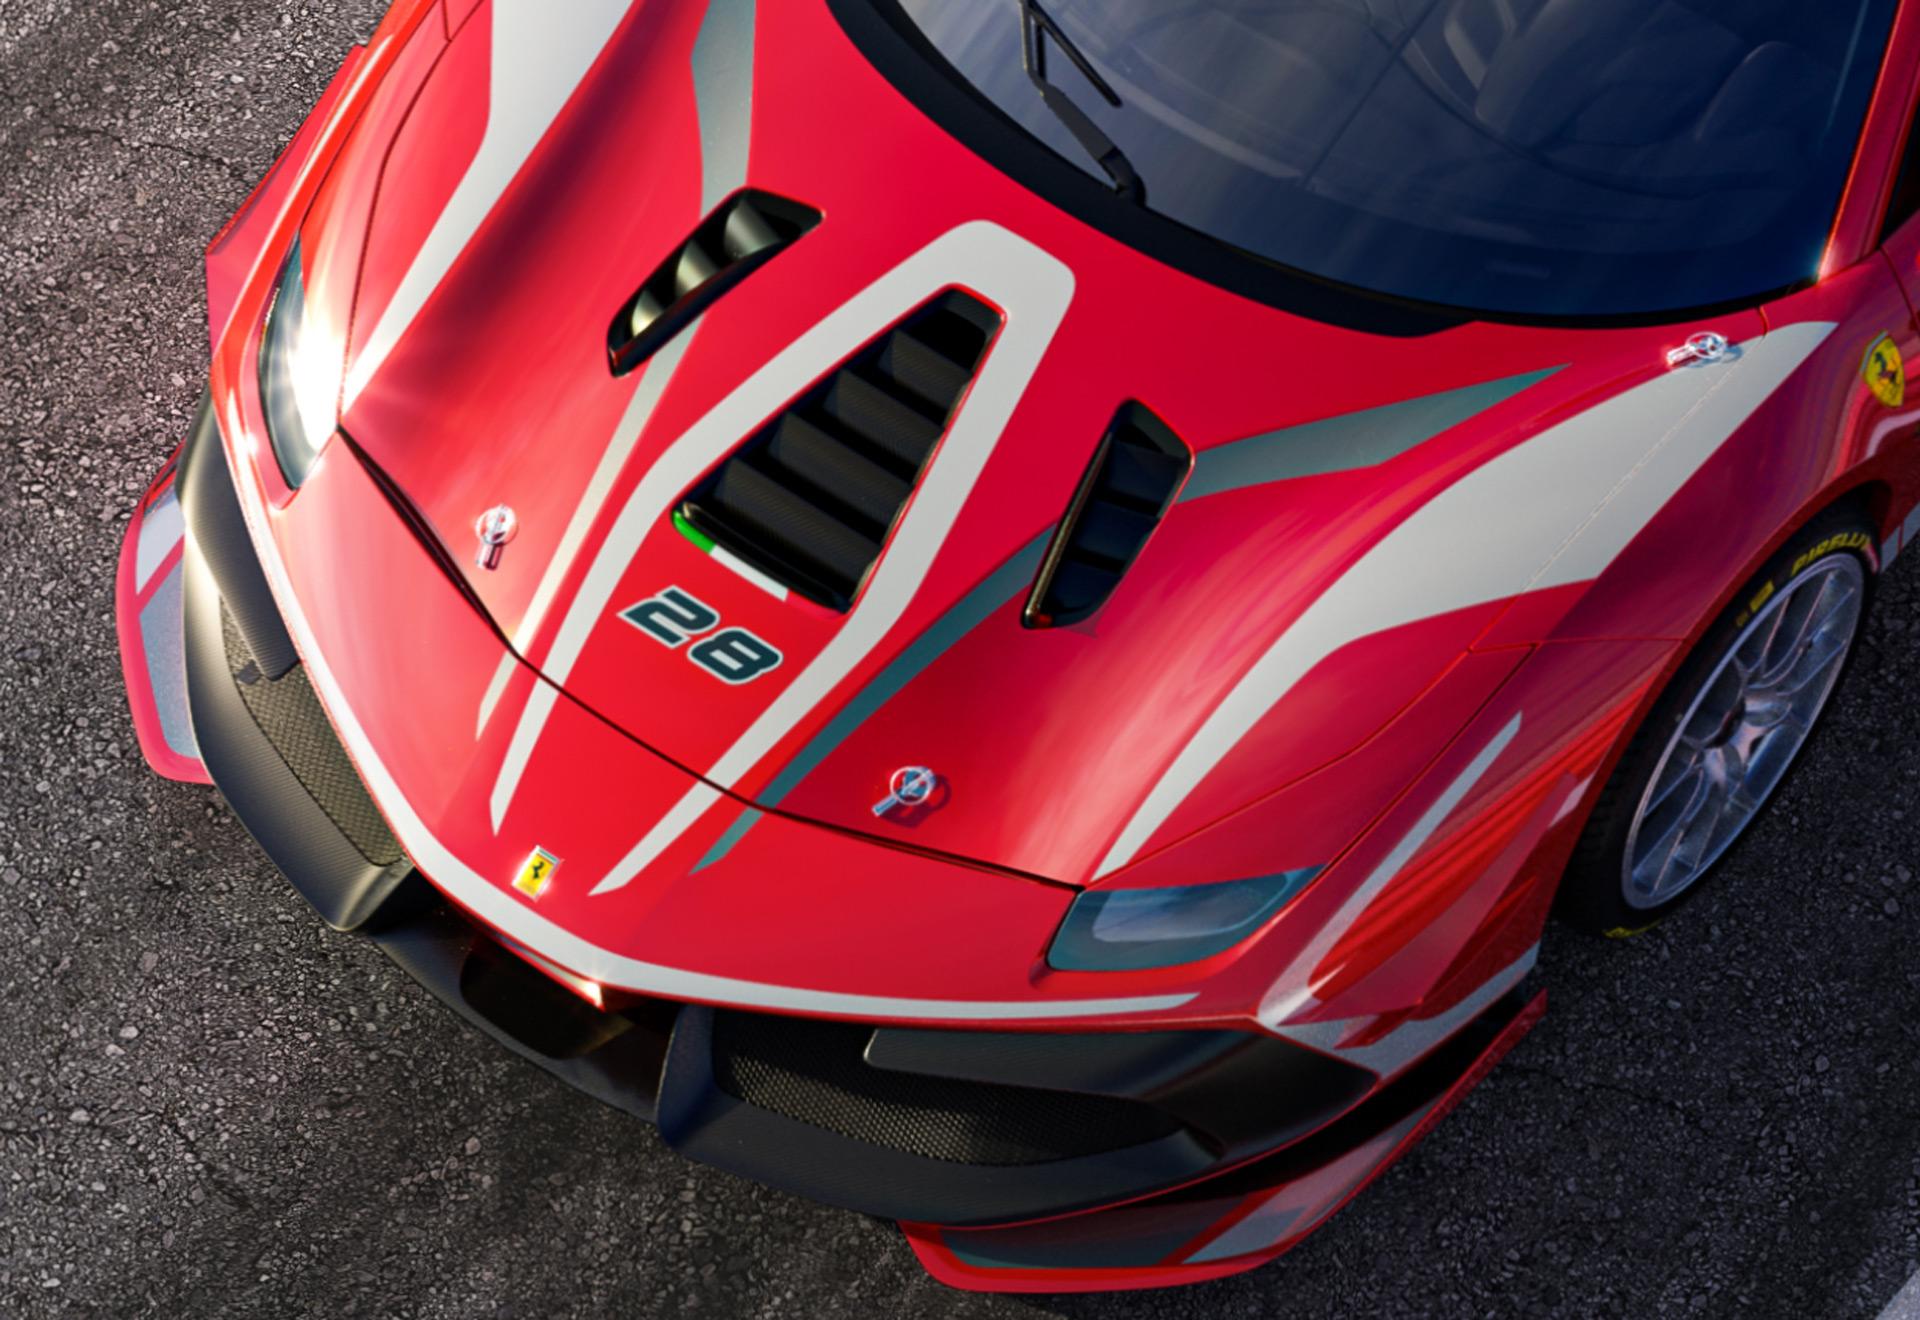 2020 Ferrari 488 Challenge Evo Race Car_100722080_h